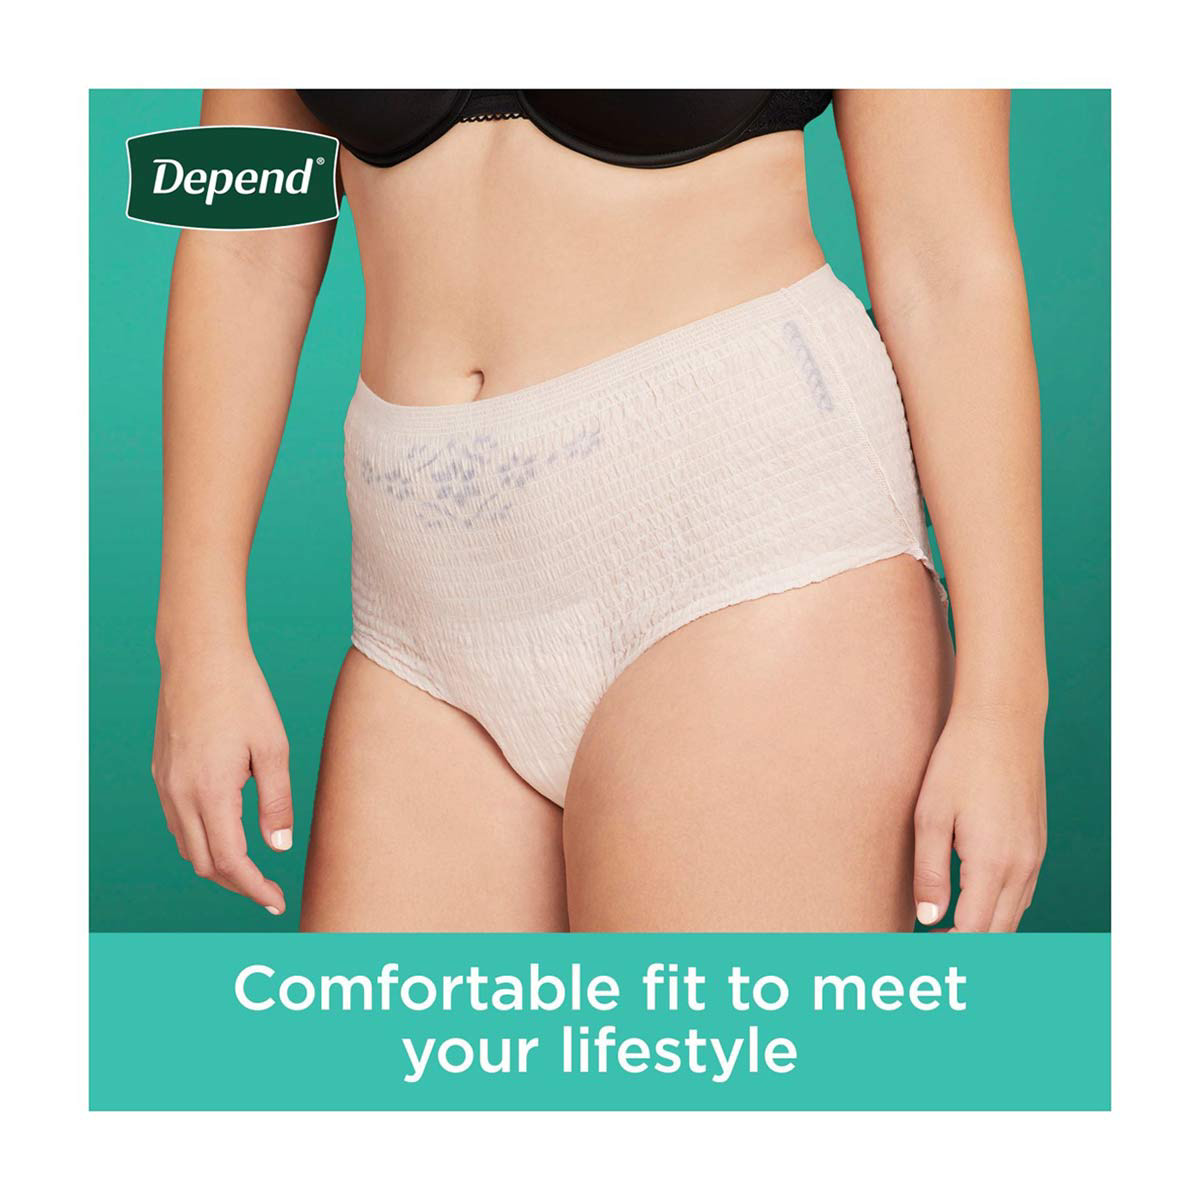 Depend Fit-Flex Incontinence Underwear For Women, Maximum